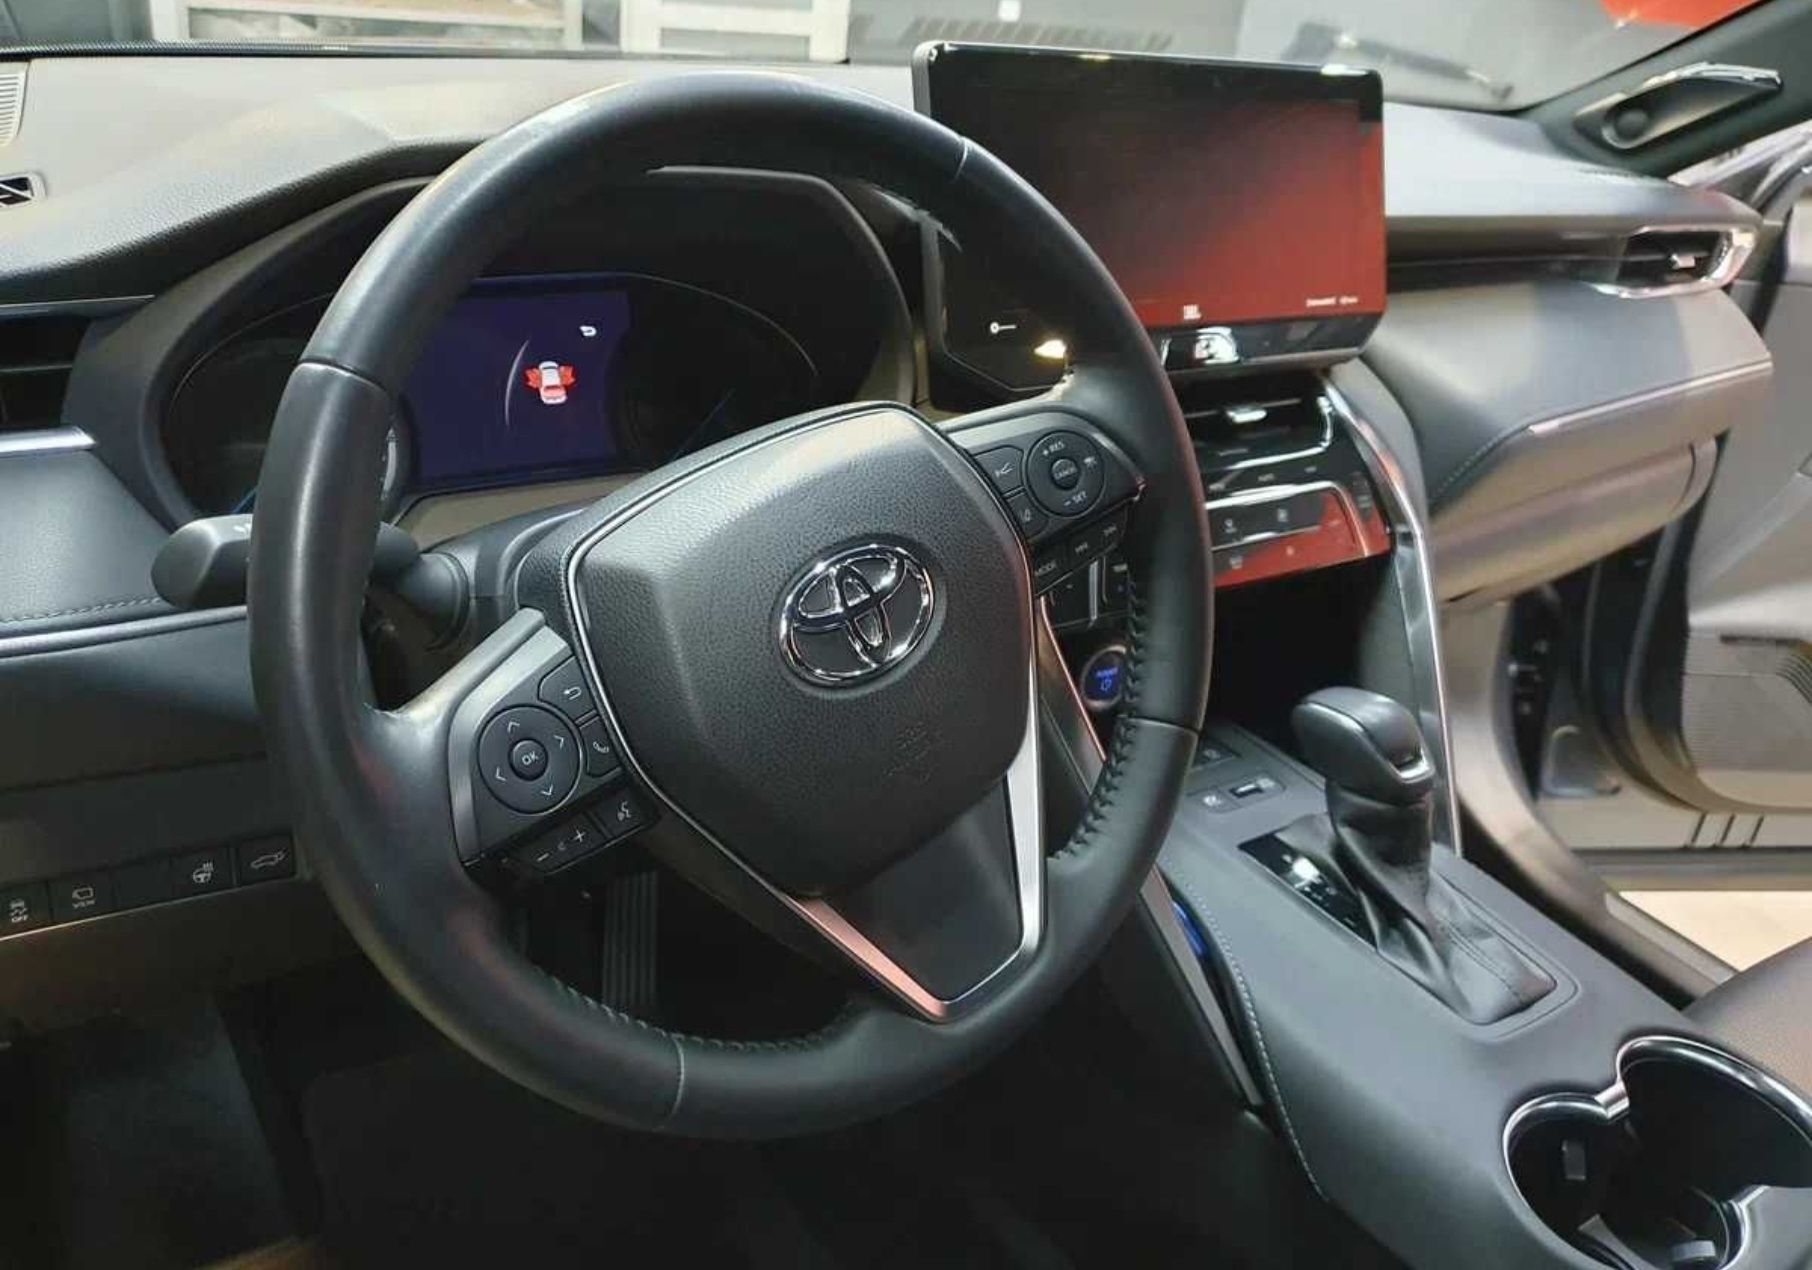 Toyota Venza 2021 год, гибрид 2.5 hyb 4WD CVT 243 л.с.